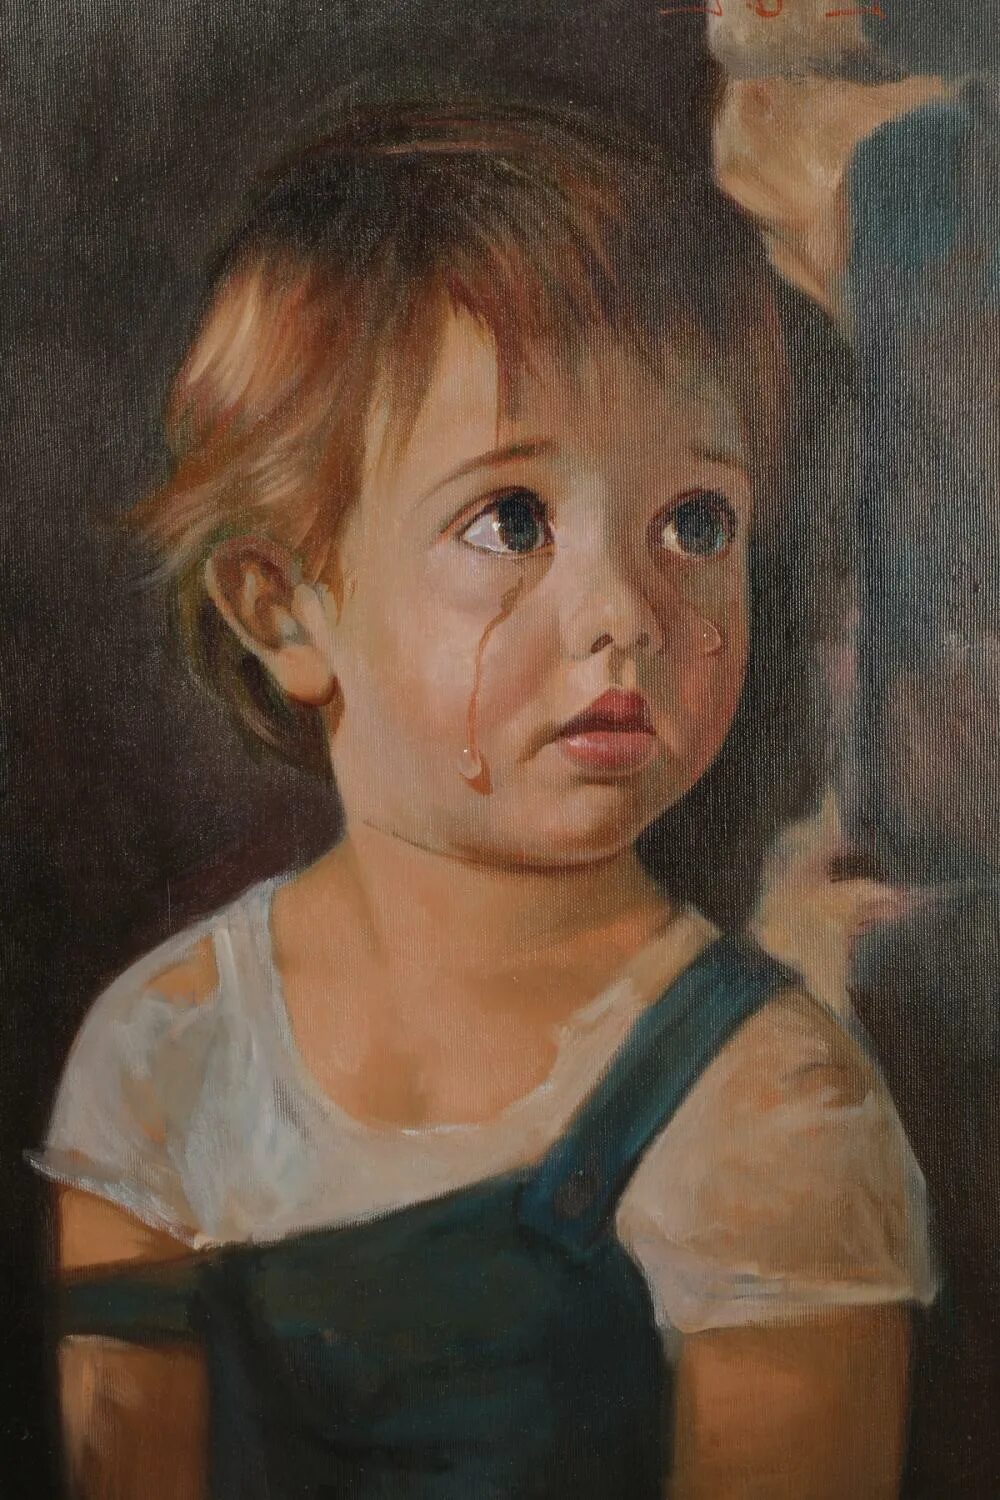 Джованни Браголин. Плачущий мальчик картина испанского художника Джованни Браголина.